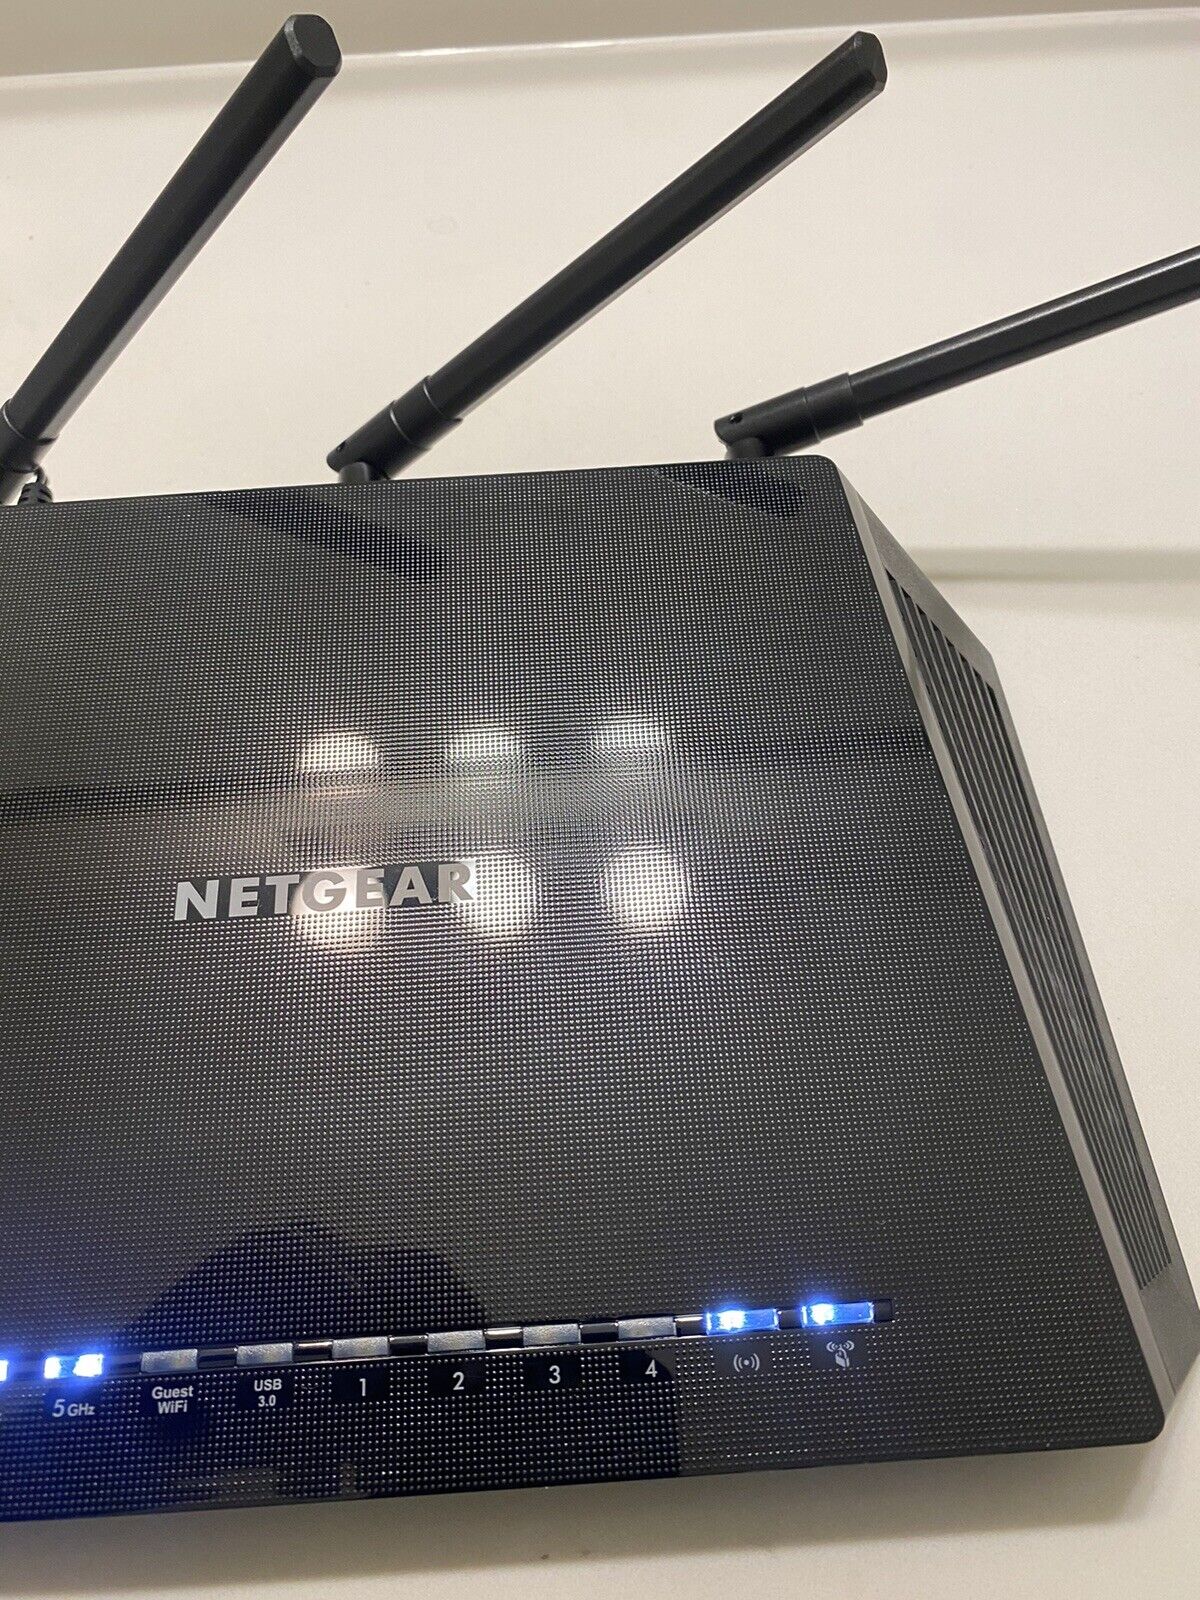 Netgear Nighthawk AC1750 Smart WiFi Router Model R6700v3